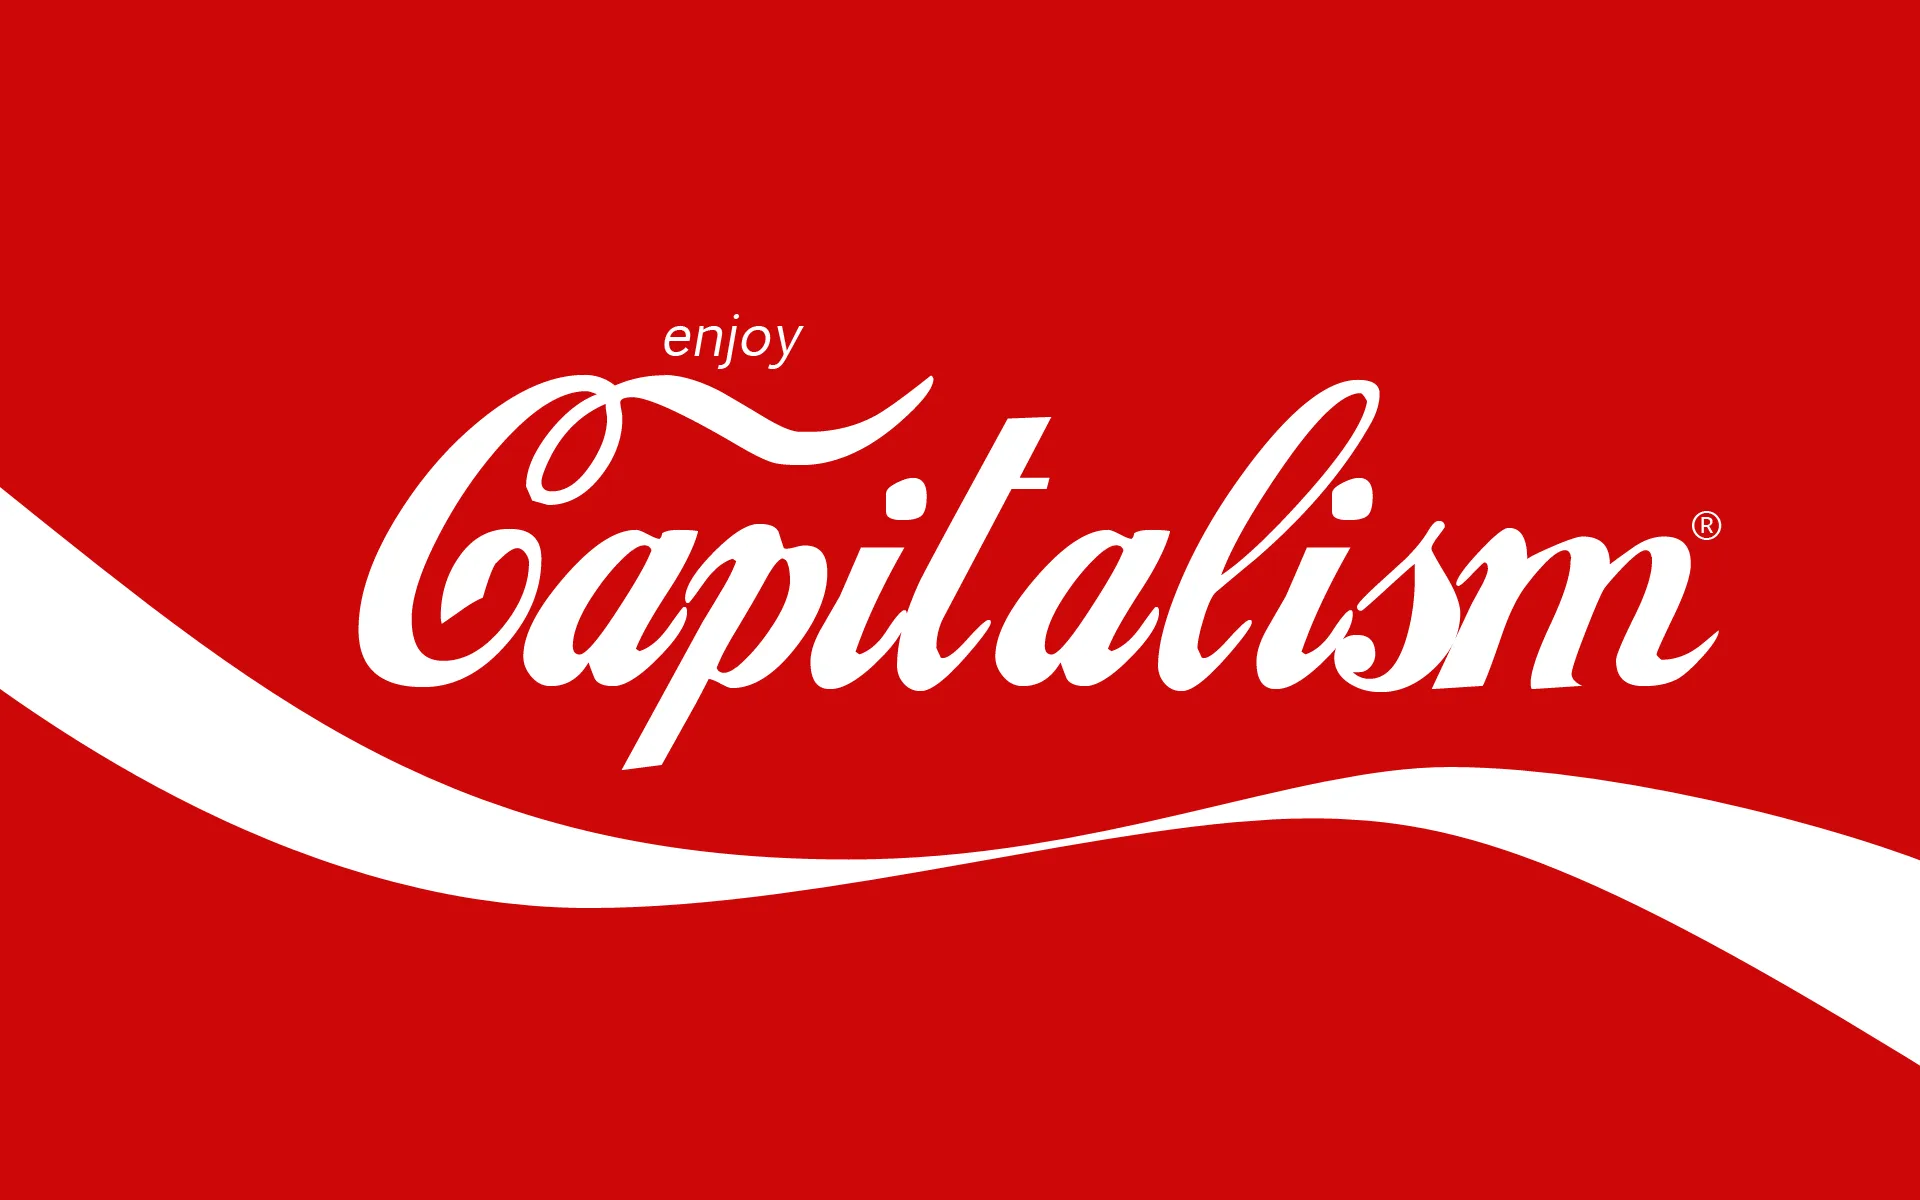 enjoy-capitalism-130